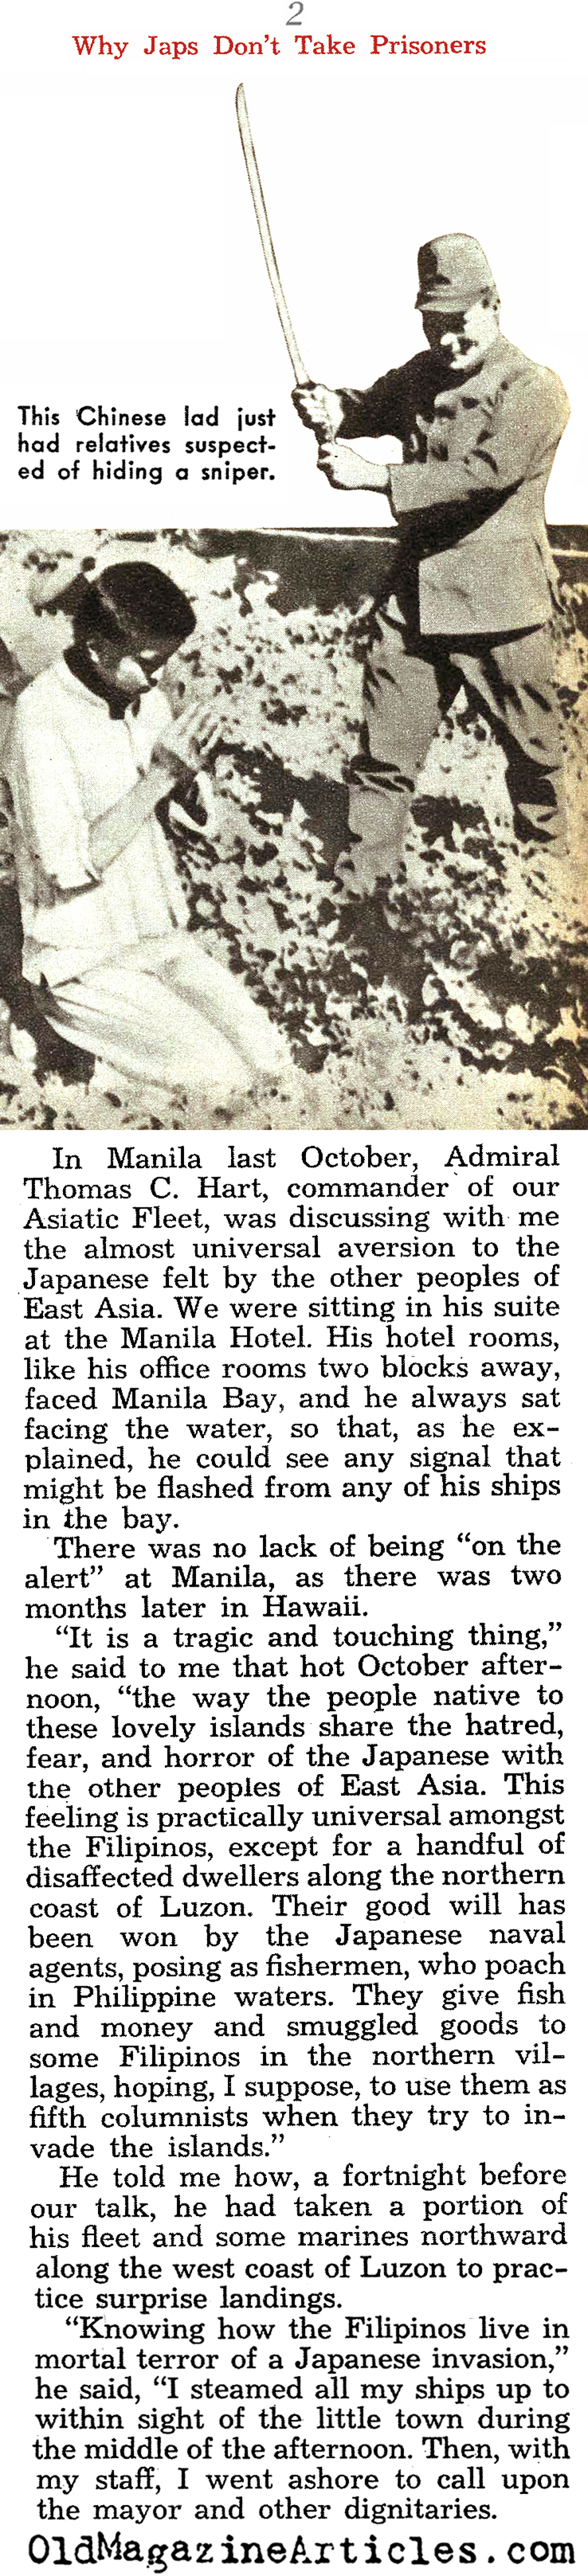 Japanese Atrocities in China (Liberty Magazine, 1942)